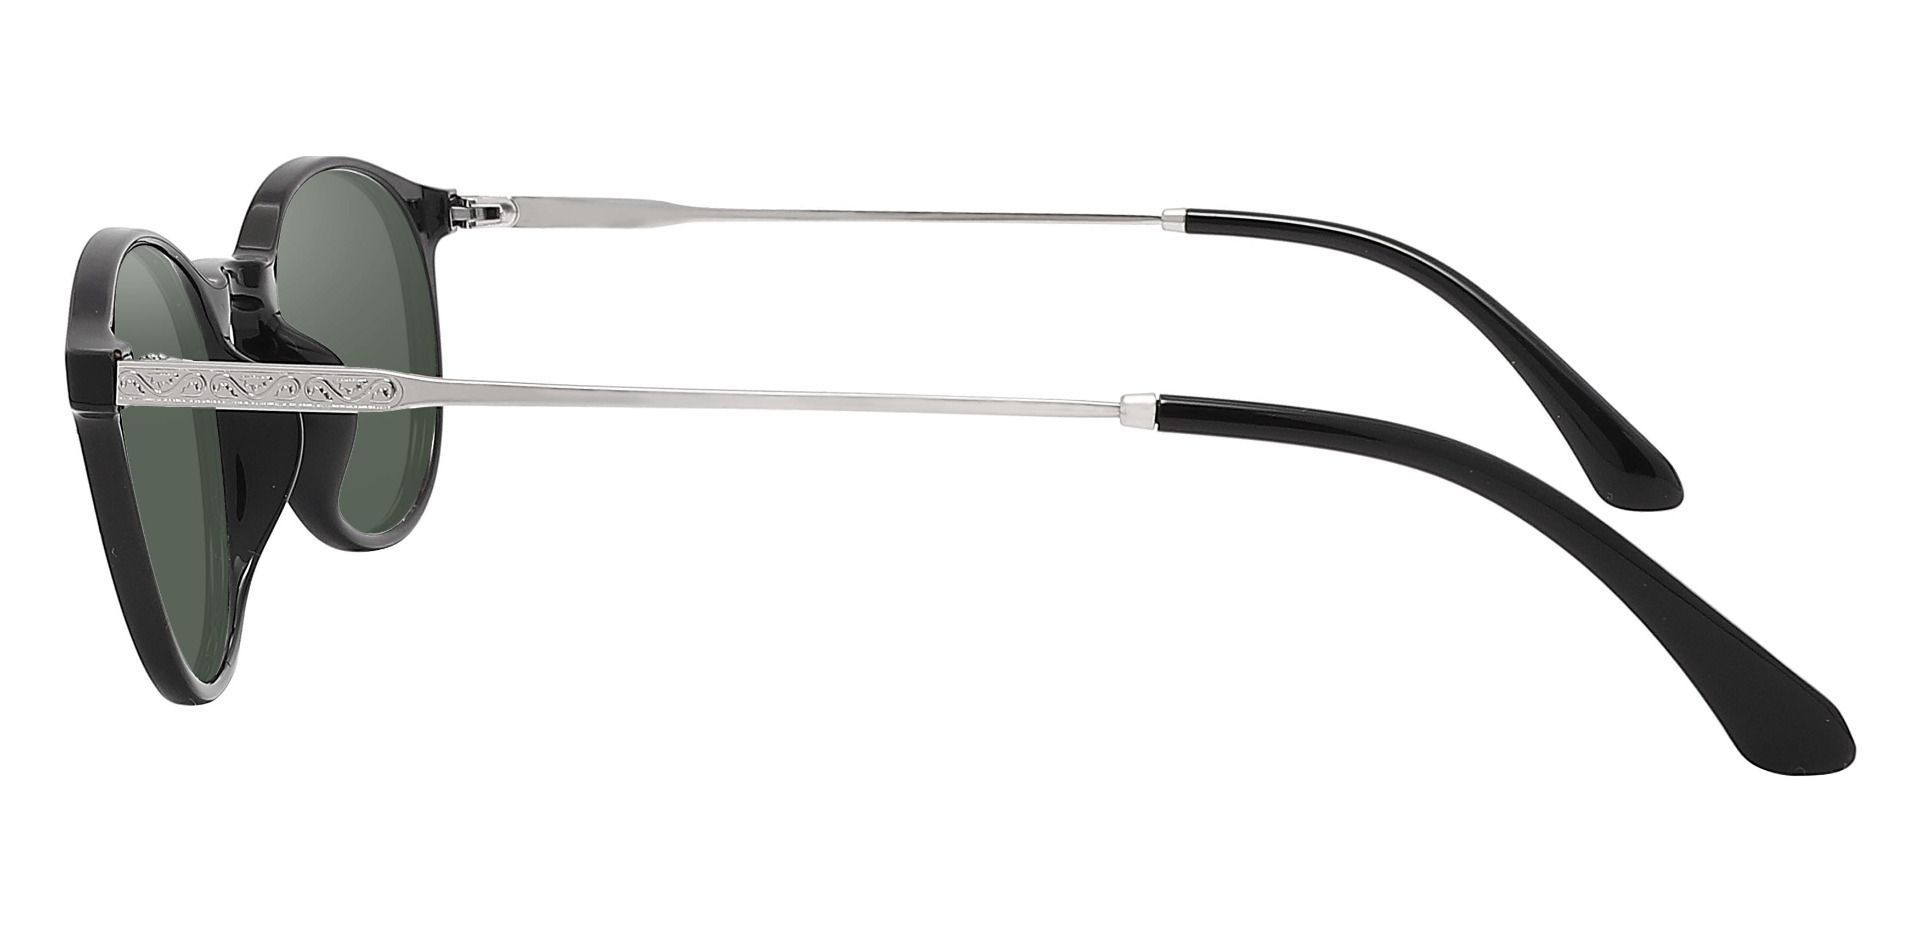 Felton Oval Lined Bifocal Sunglasses - Black Frame With Green Lenses